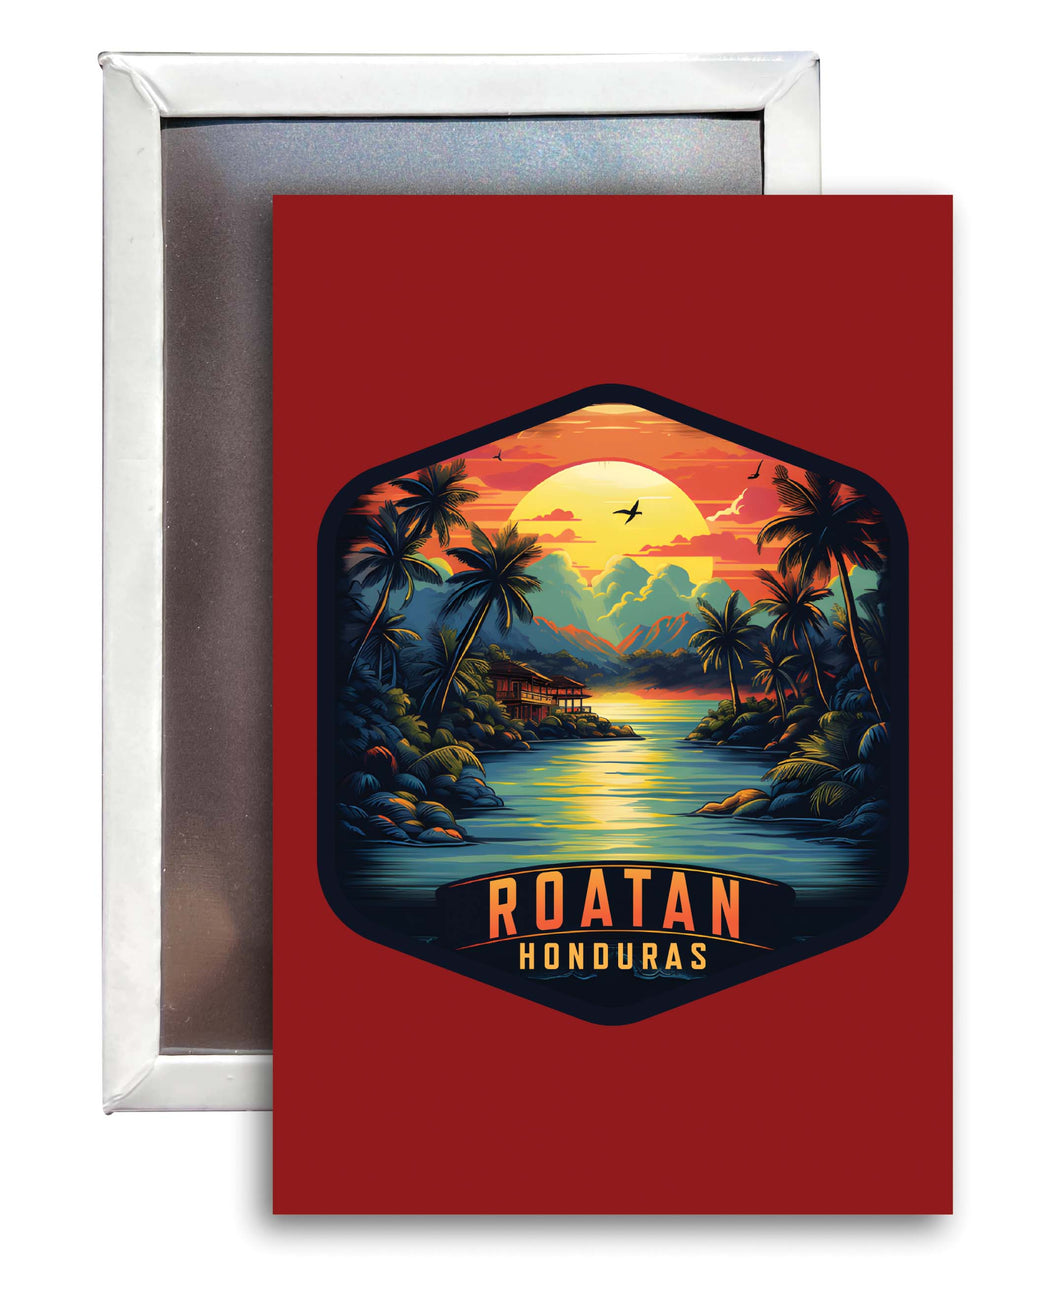 Roatan Honduras A Souvenir Durable & Vibrant Decor Fridge Magnet 2.5